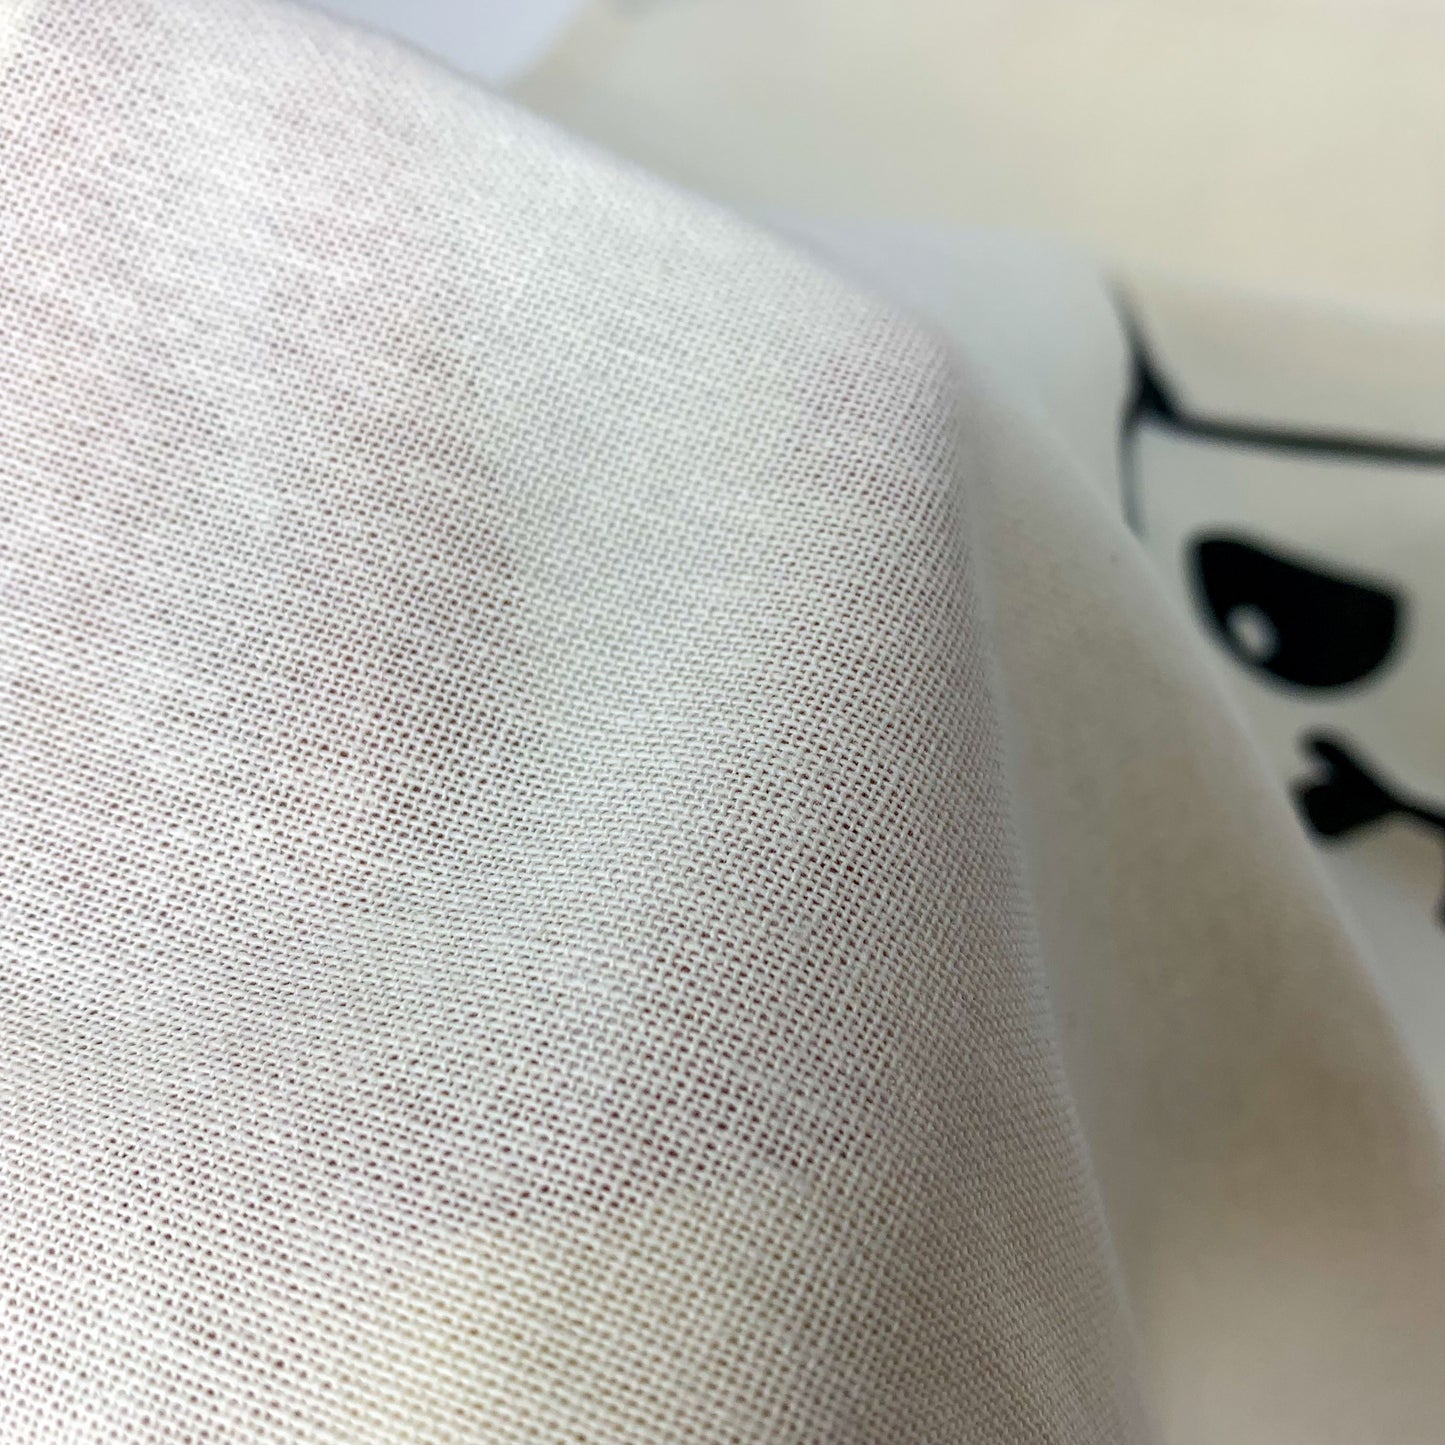 Panda Cotton Tea Towel, 50 x 70 cm, organic cotton